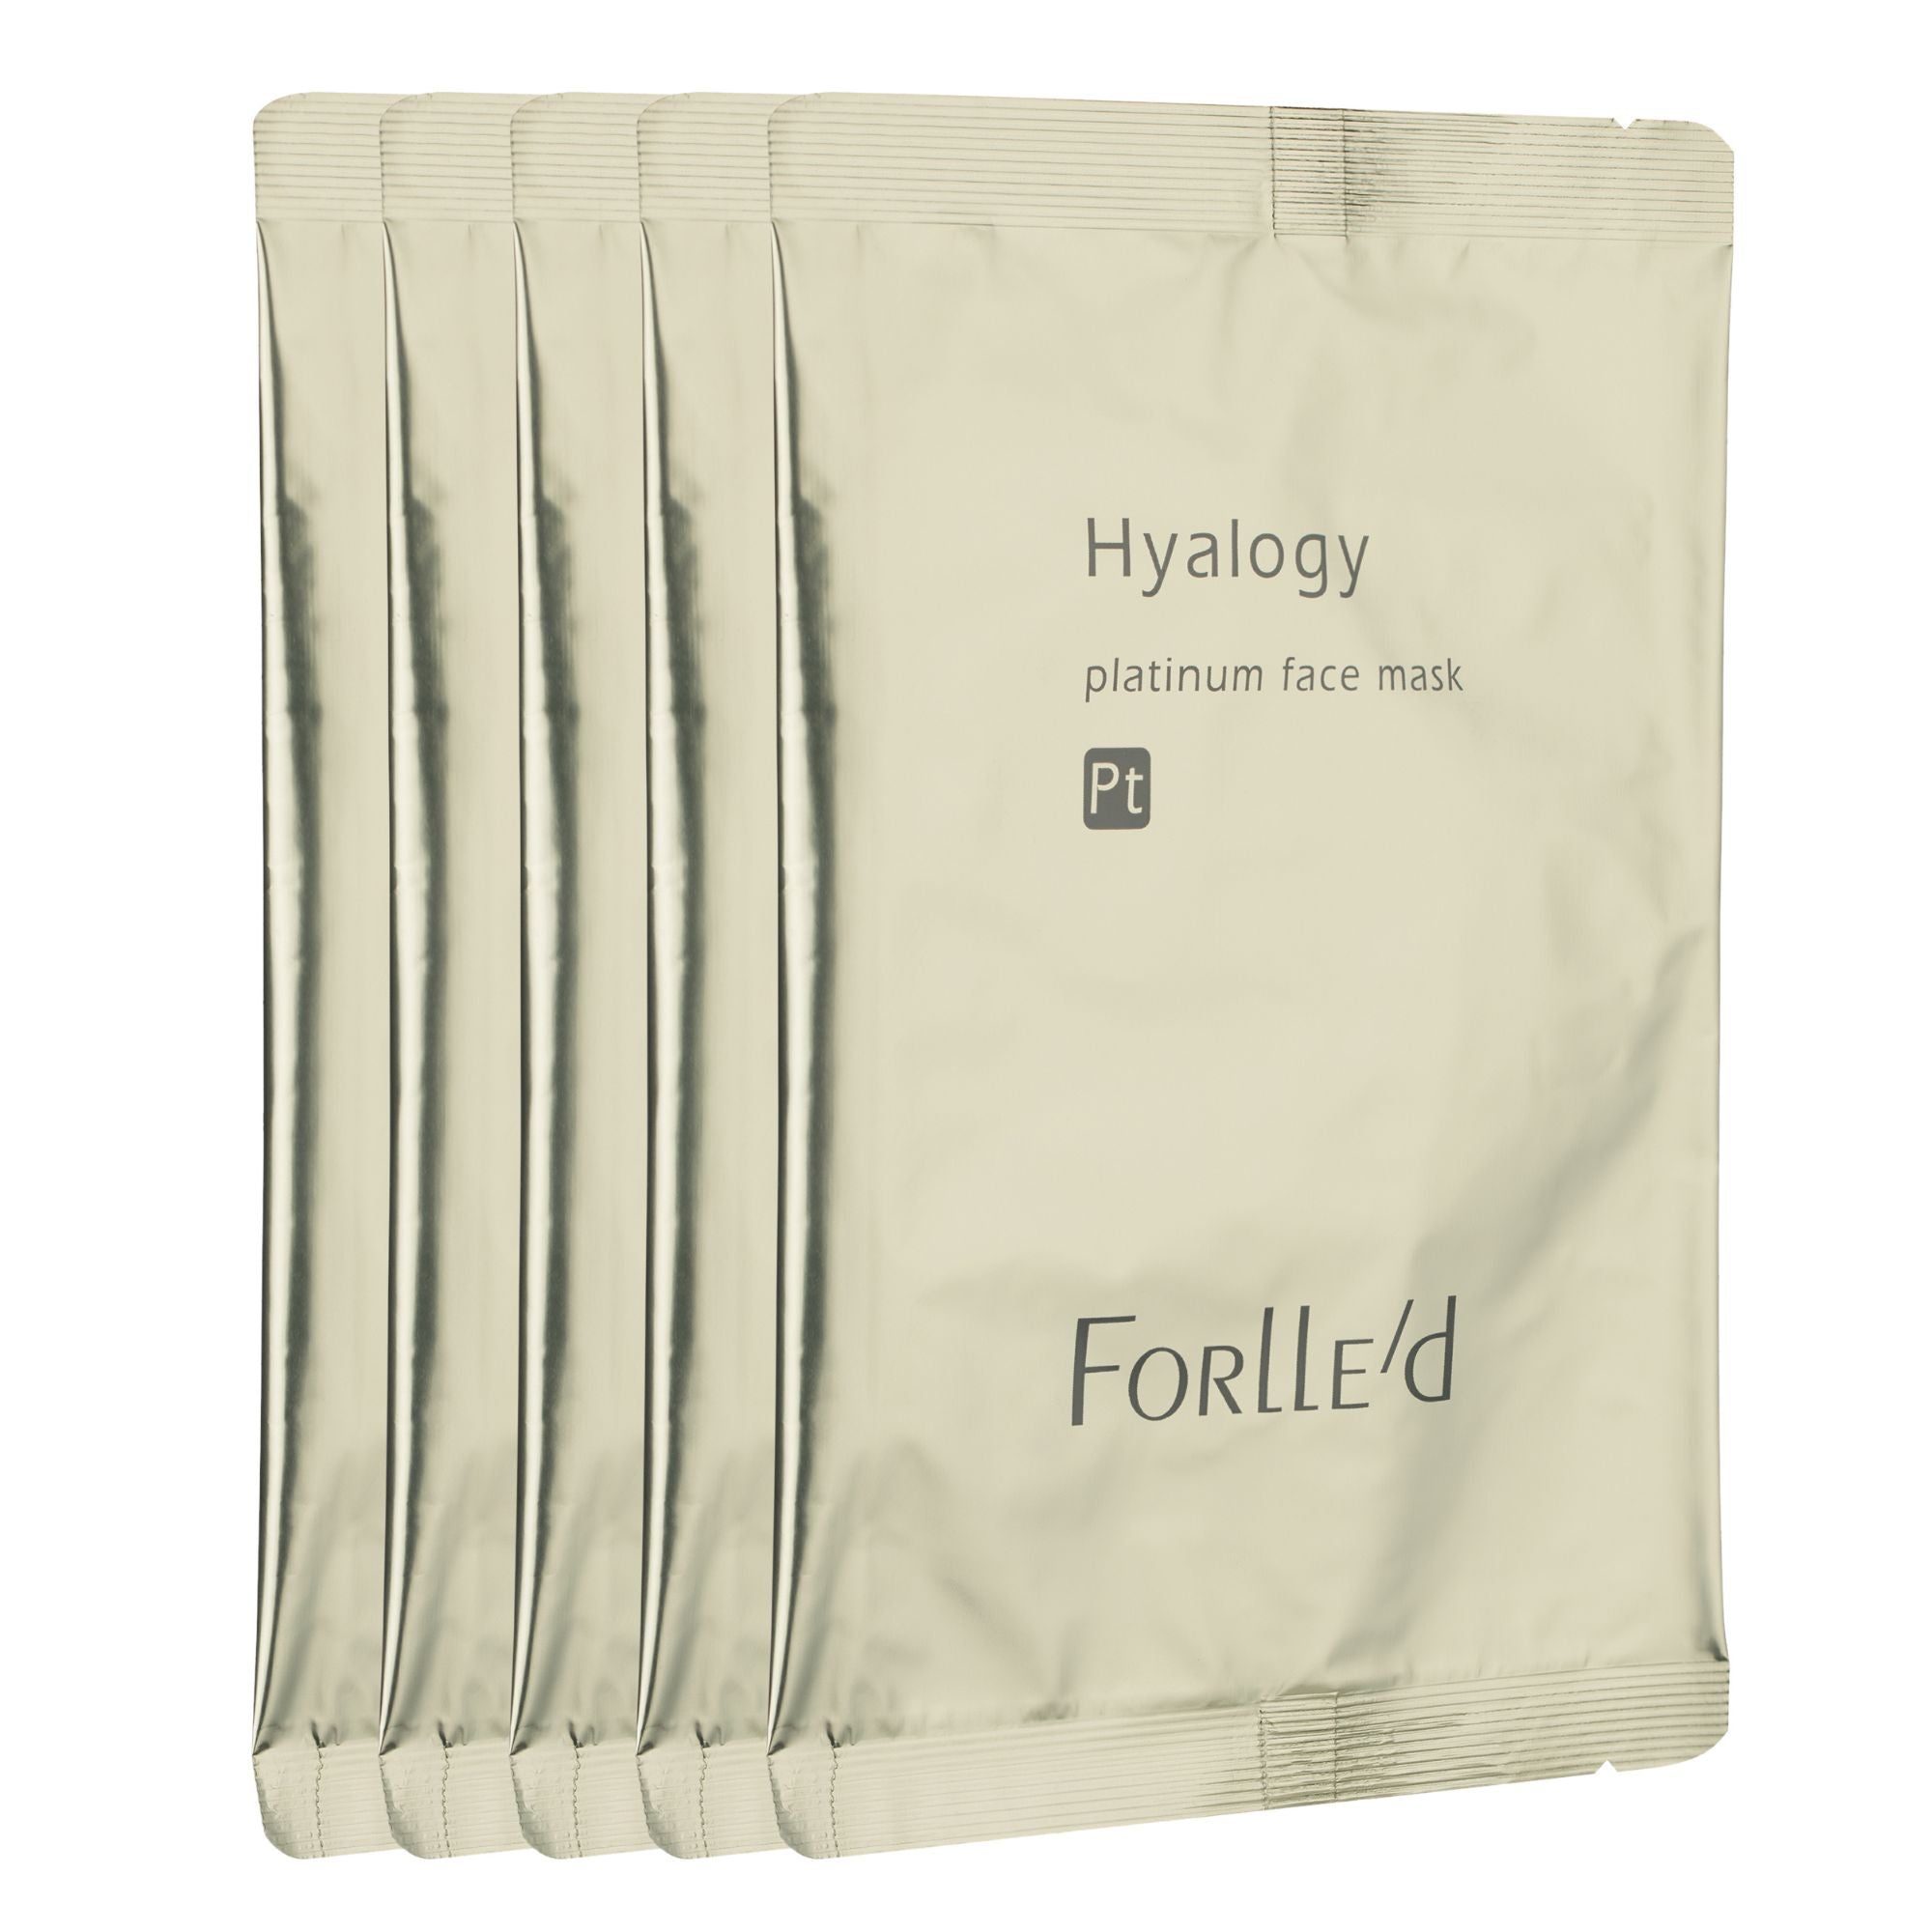 Forlle'd Hyalogy Platinum Face mask (5 Stück)